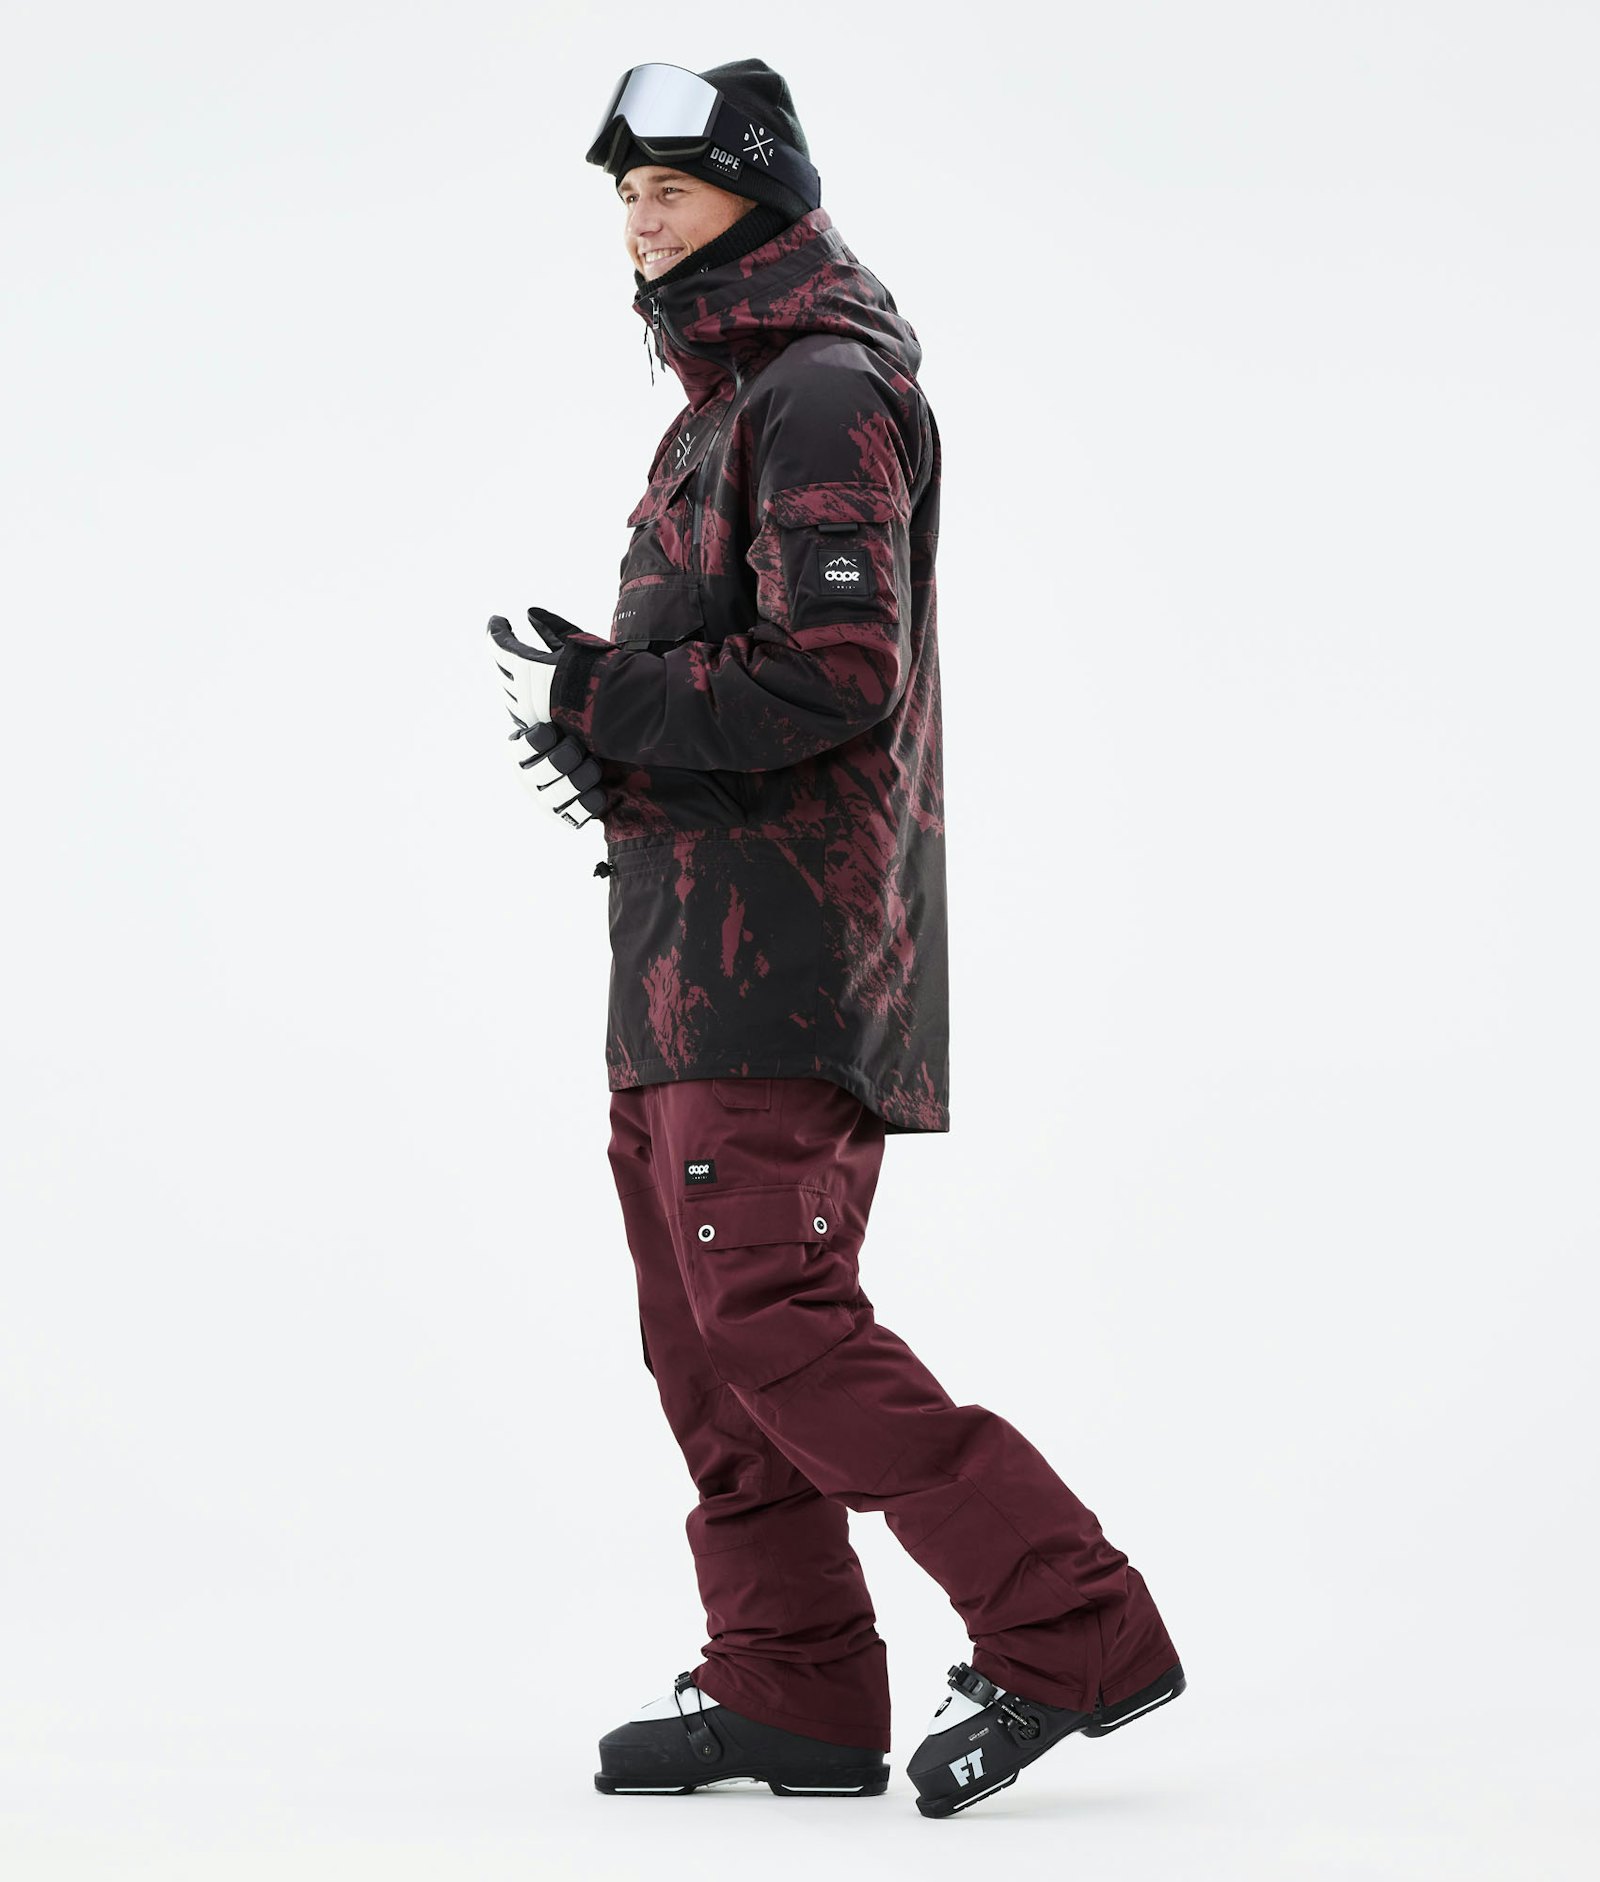 Akin 2021 Veste de Ski Homme Paint Burgundy